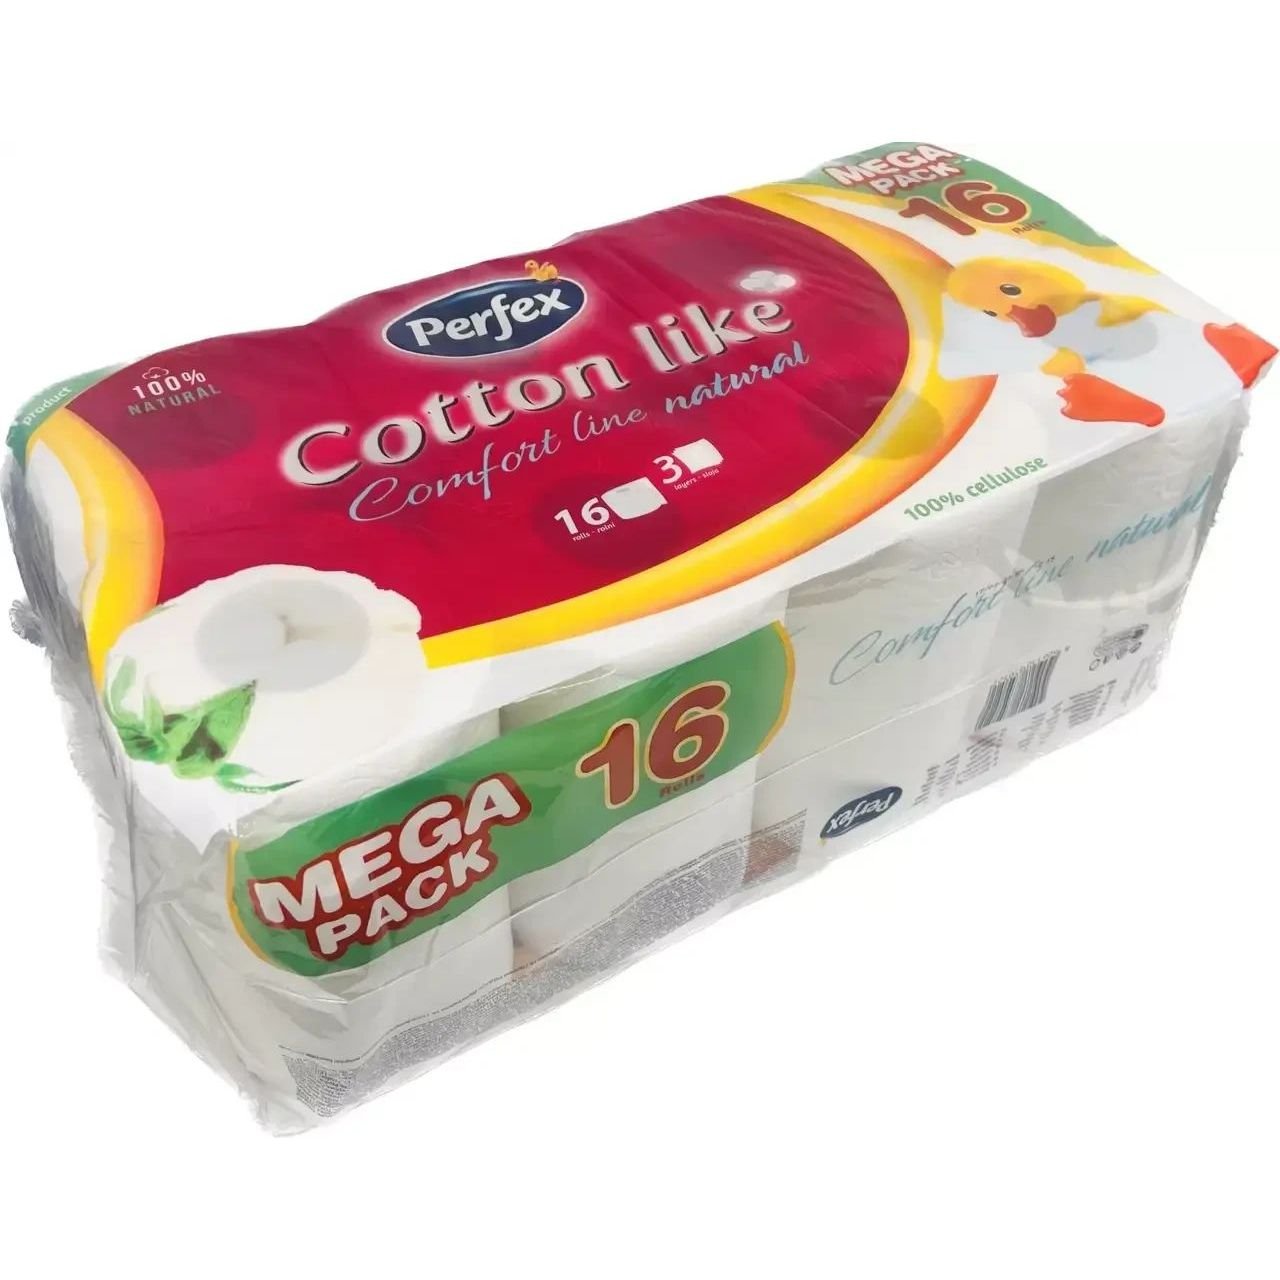 Туалетная бумага Perfex Cotton Comfort Line трехслойная 16 шт. - фото 3